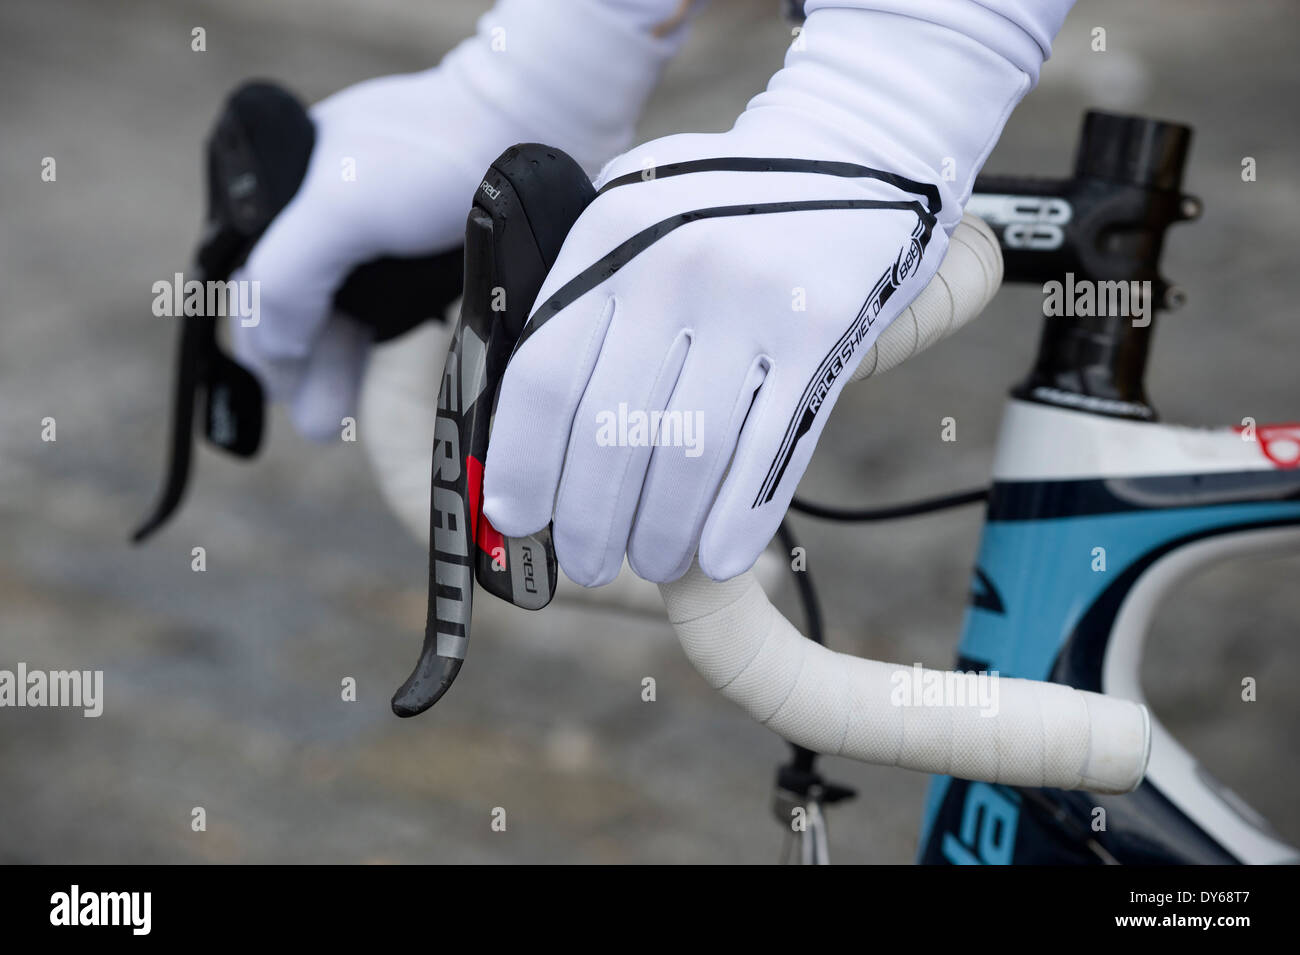 Racing bicycle dropped handlebars and brake levers Stock Photo